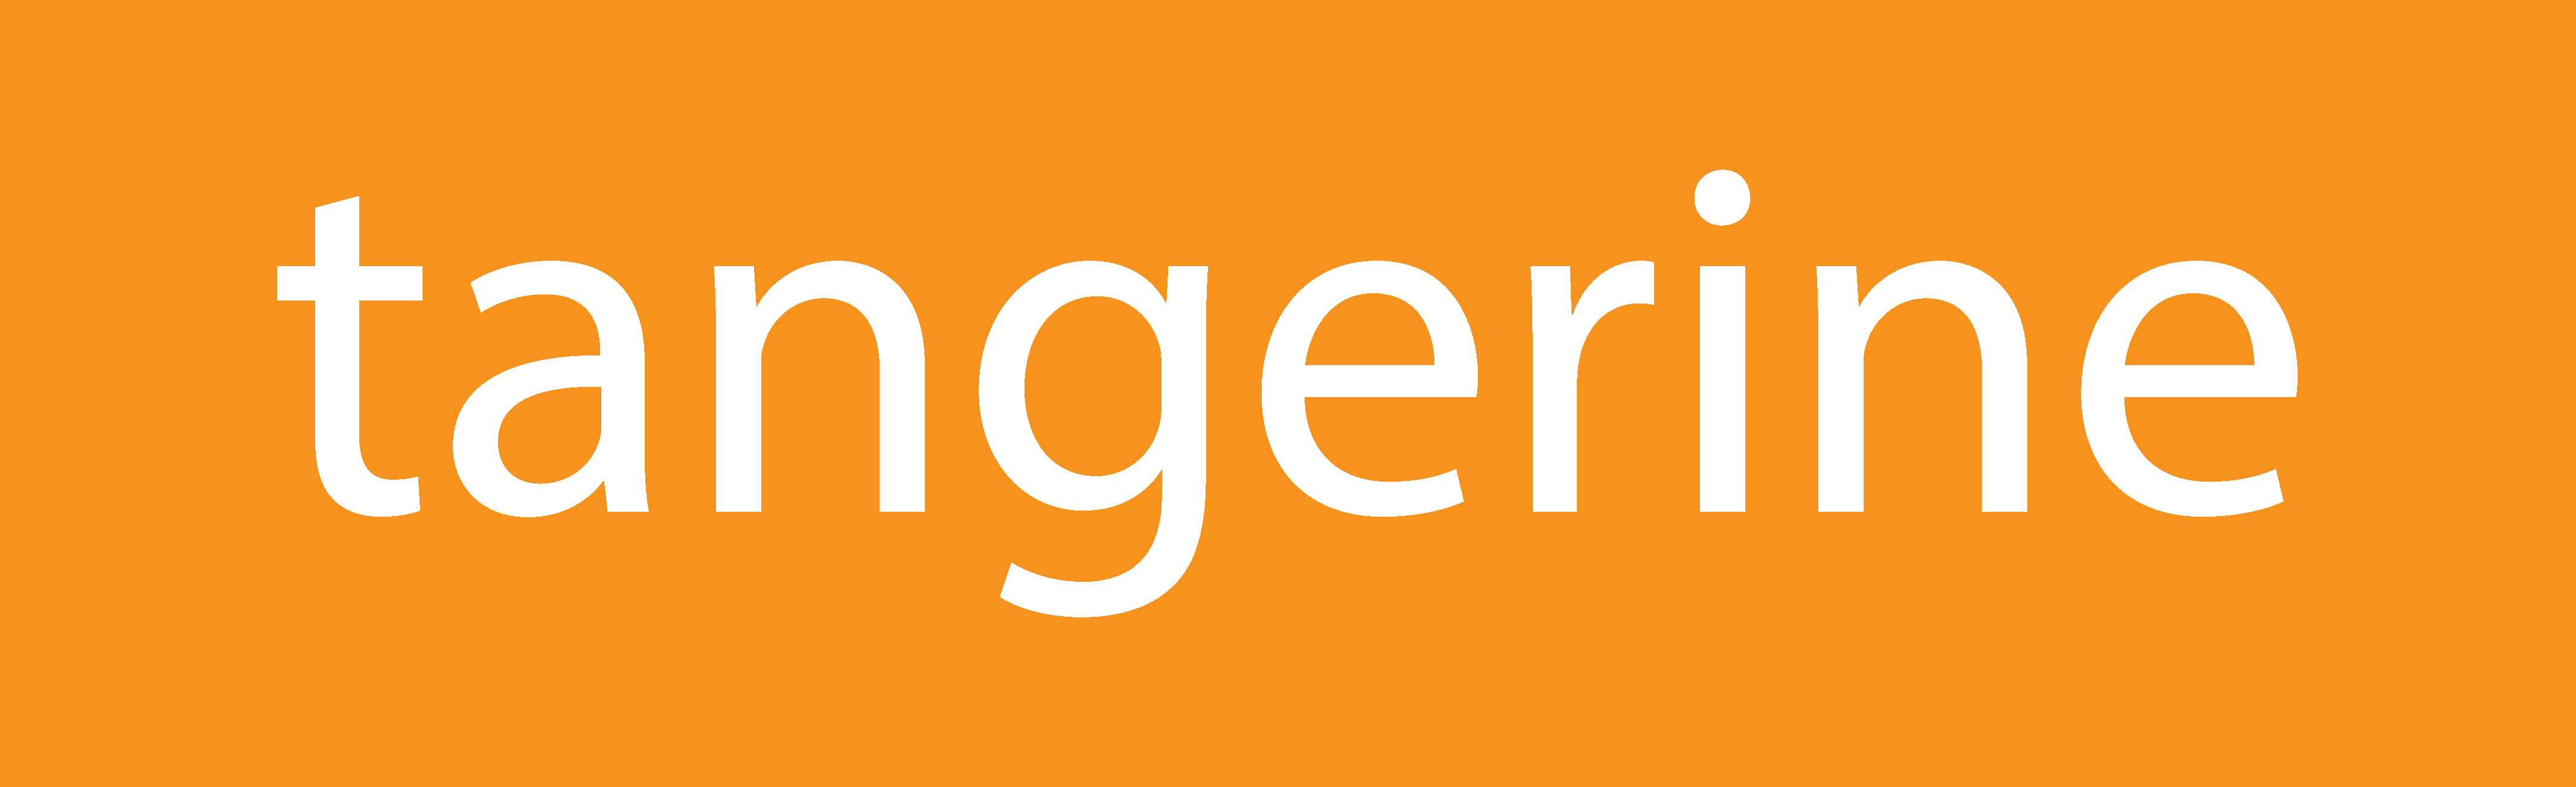 Start working at Tangerine Co., Ltd.